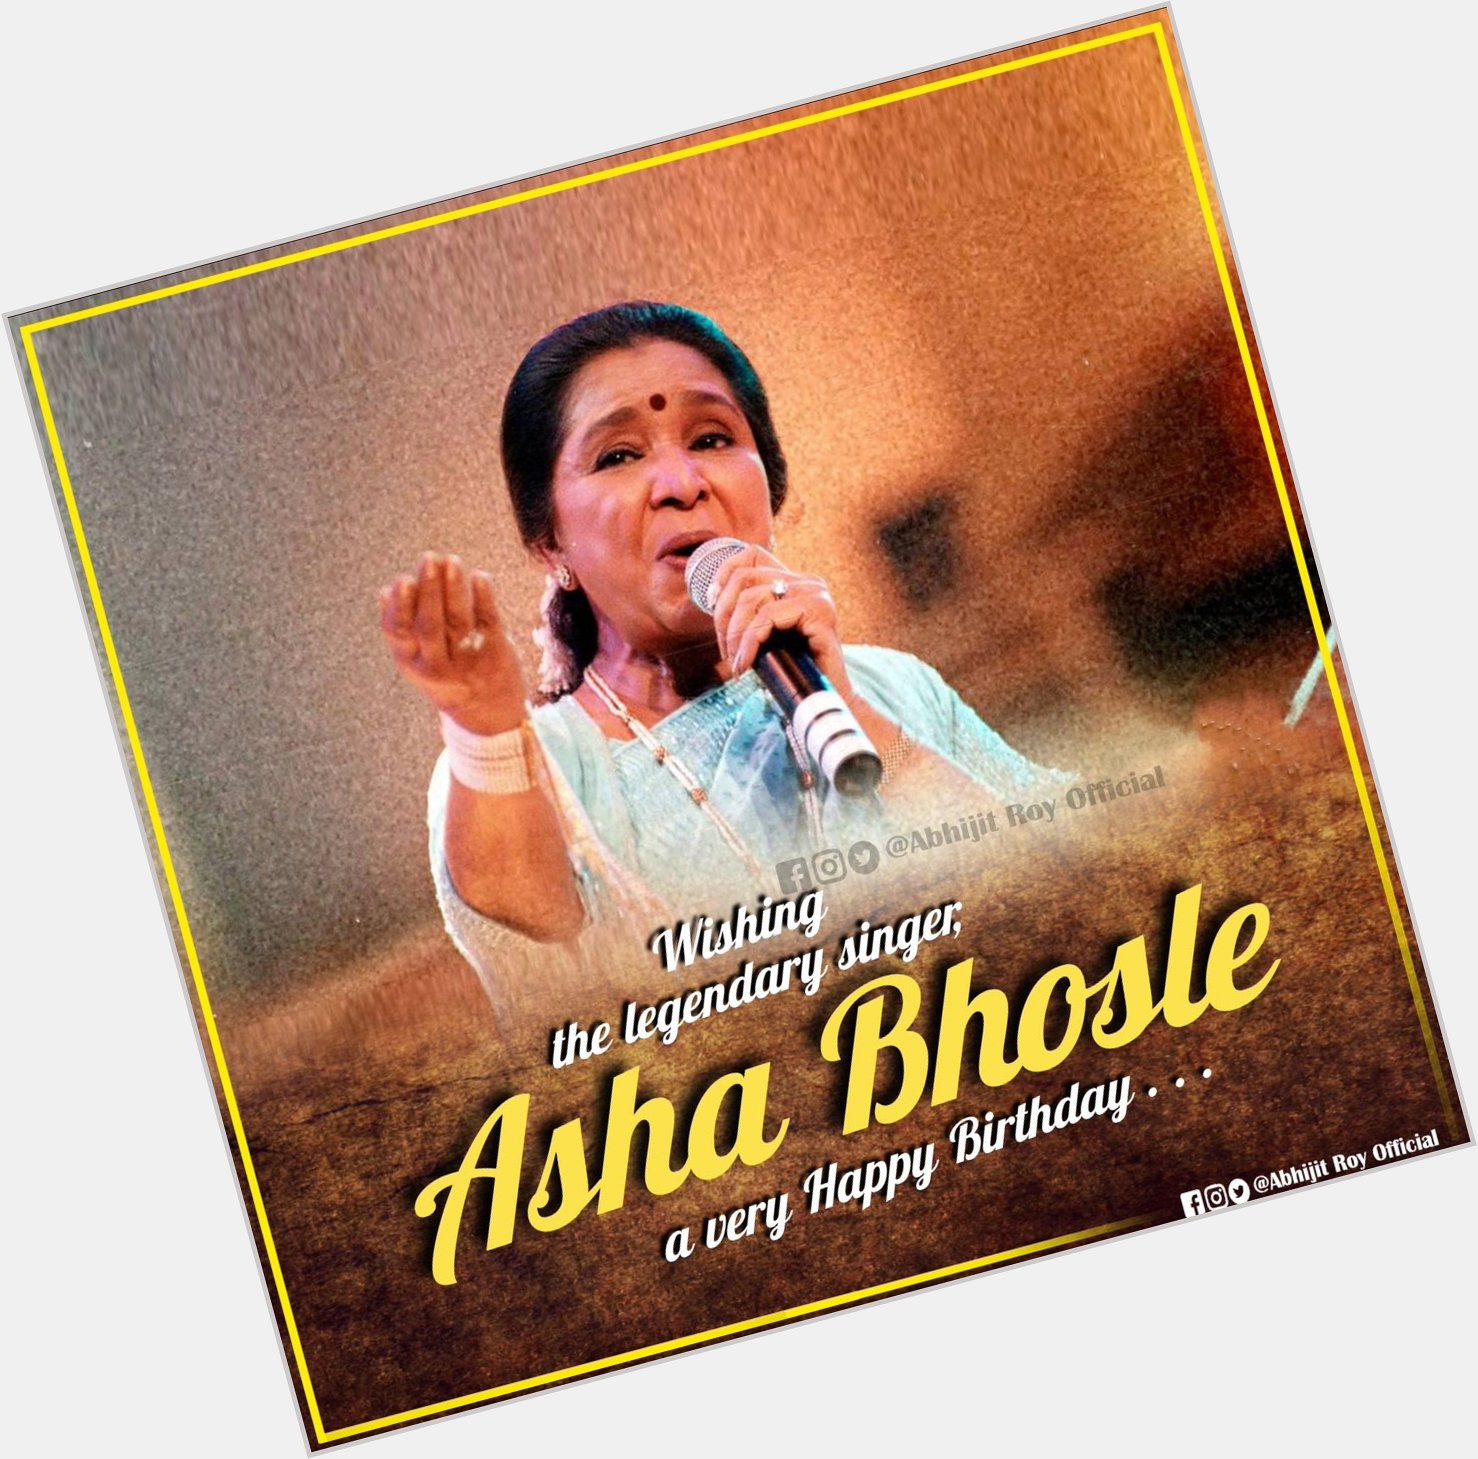 Wishing the legendary singer, 
Asha Bhosle a very Happy Birthday . . . 